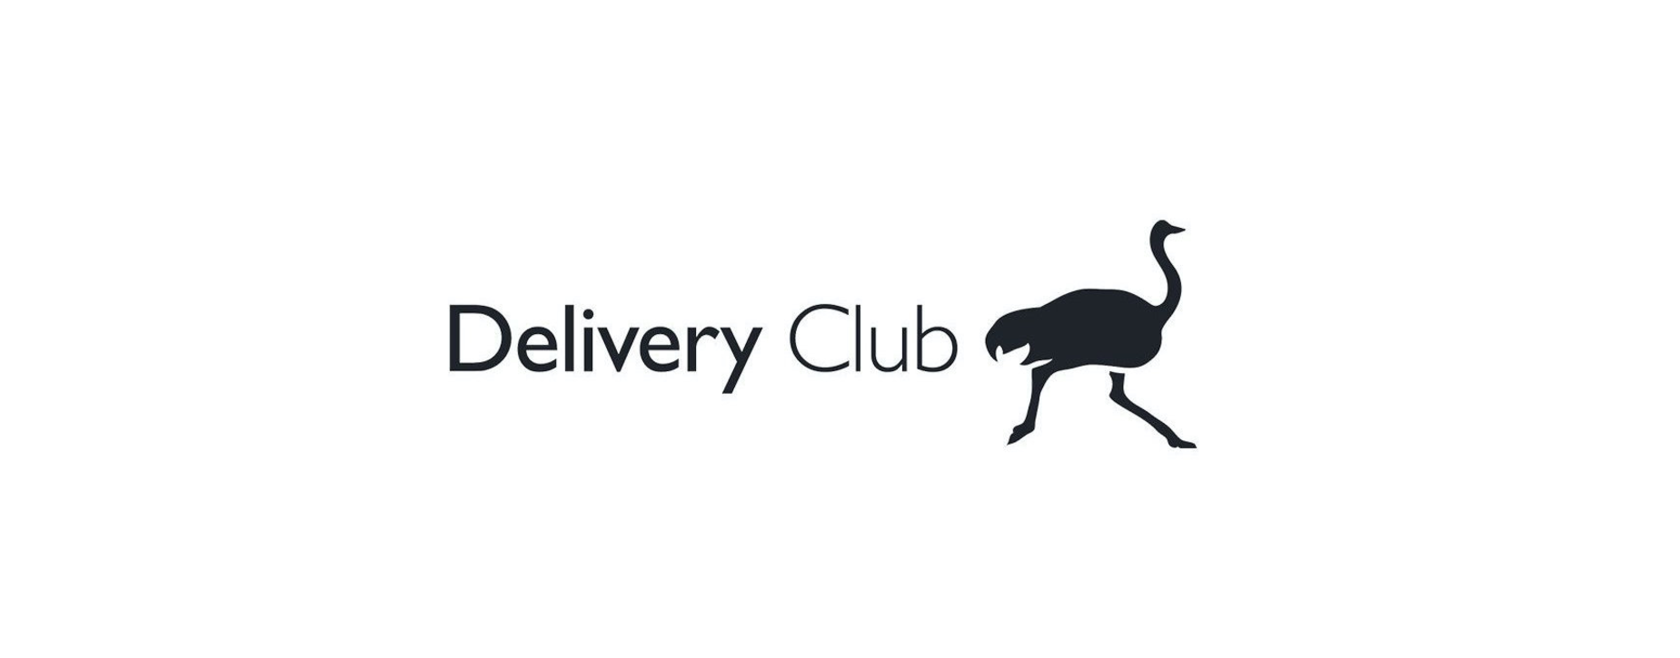 Ин бади. Значок Деливери. Delivery Club лого. Страус Деливери. Деливери клаб на прозрачном фоне.